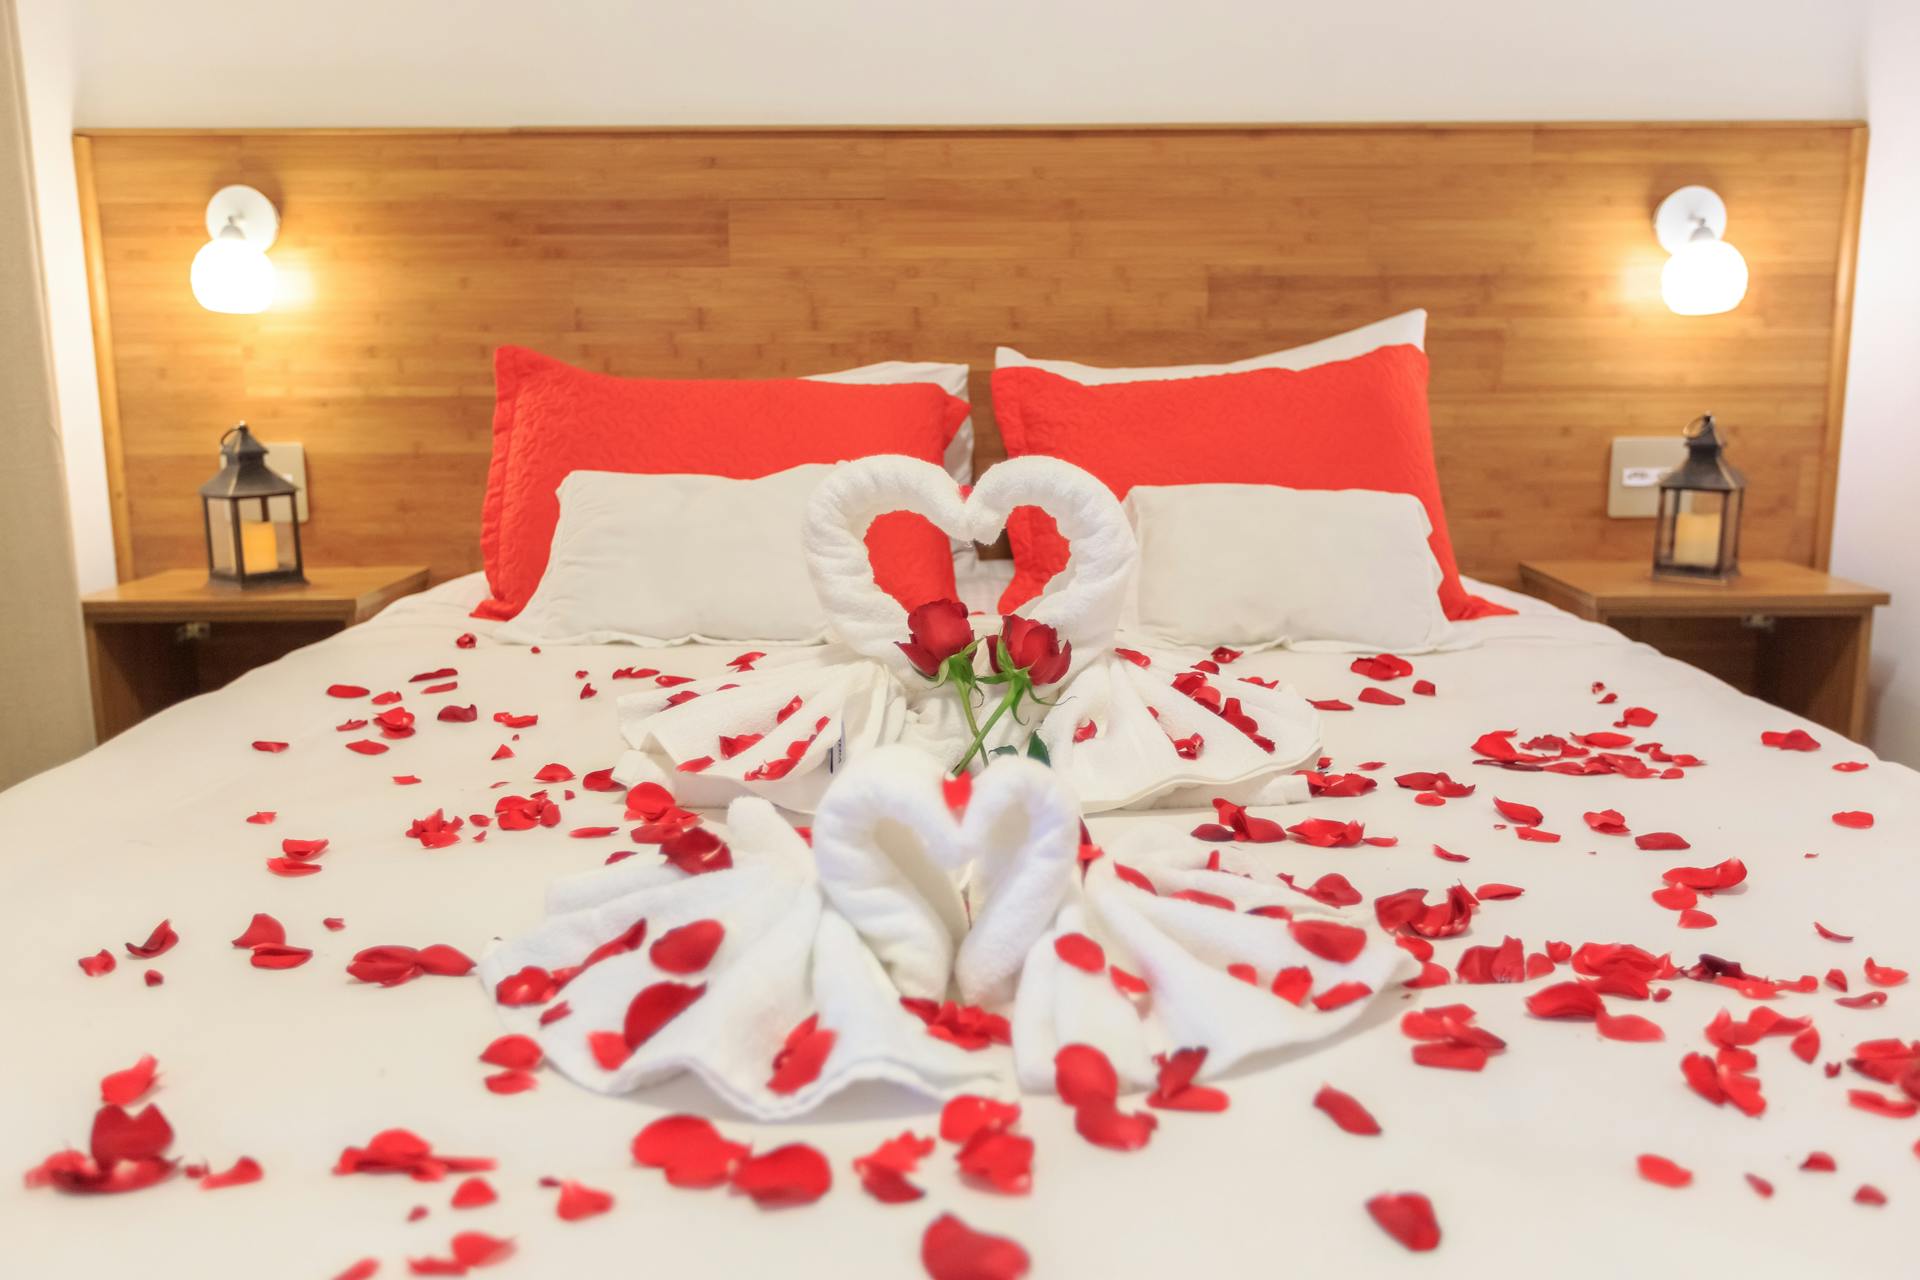 A honeymoon suite | Source: Pexels